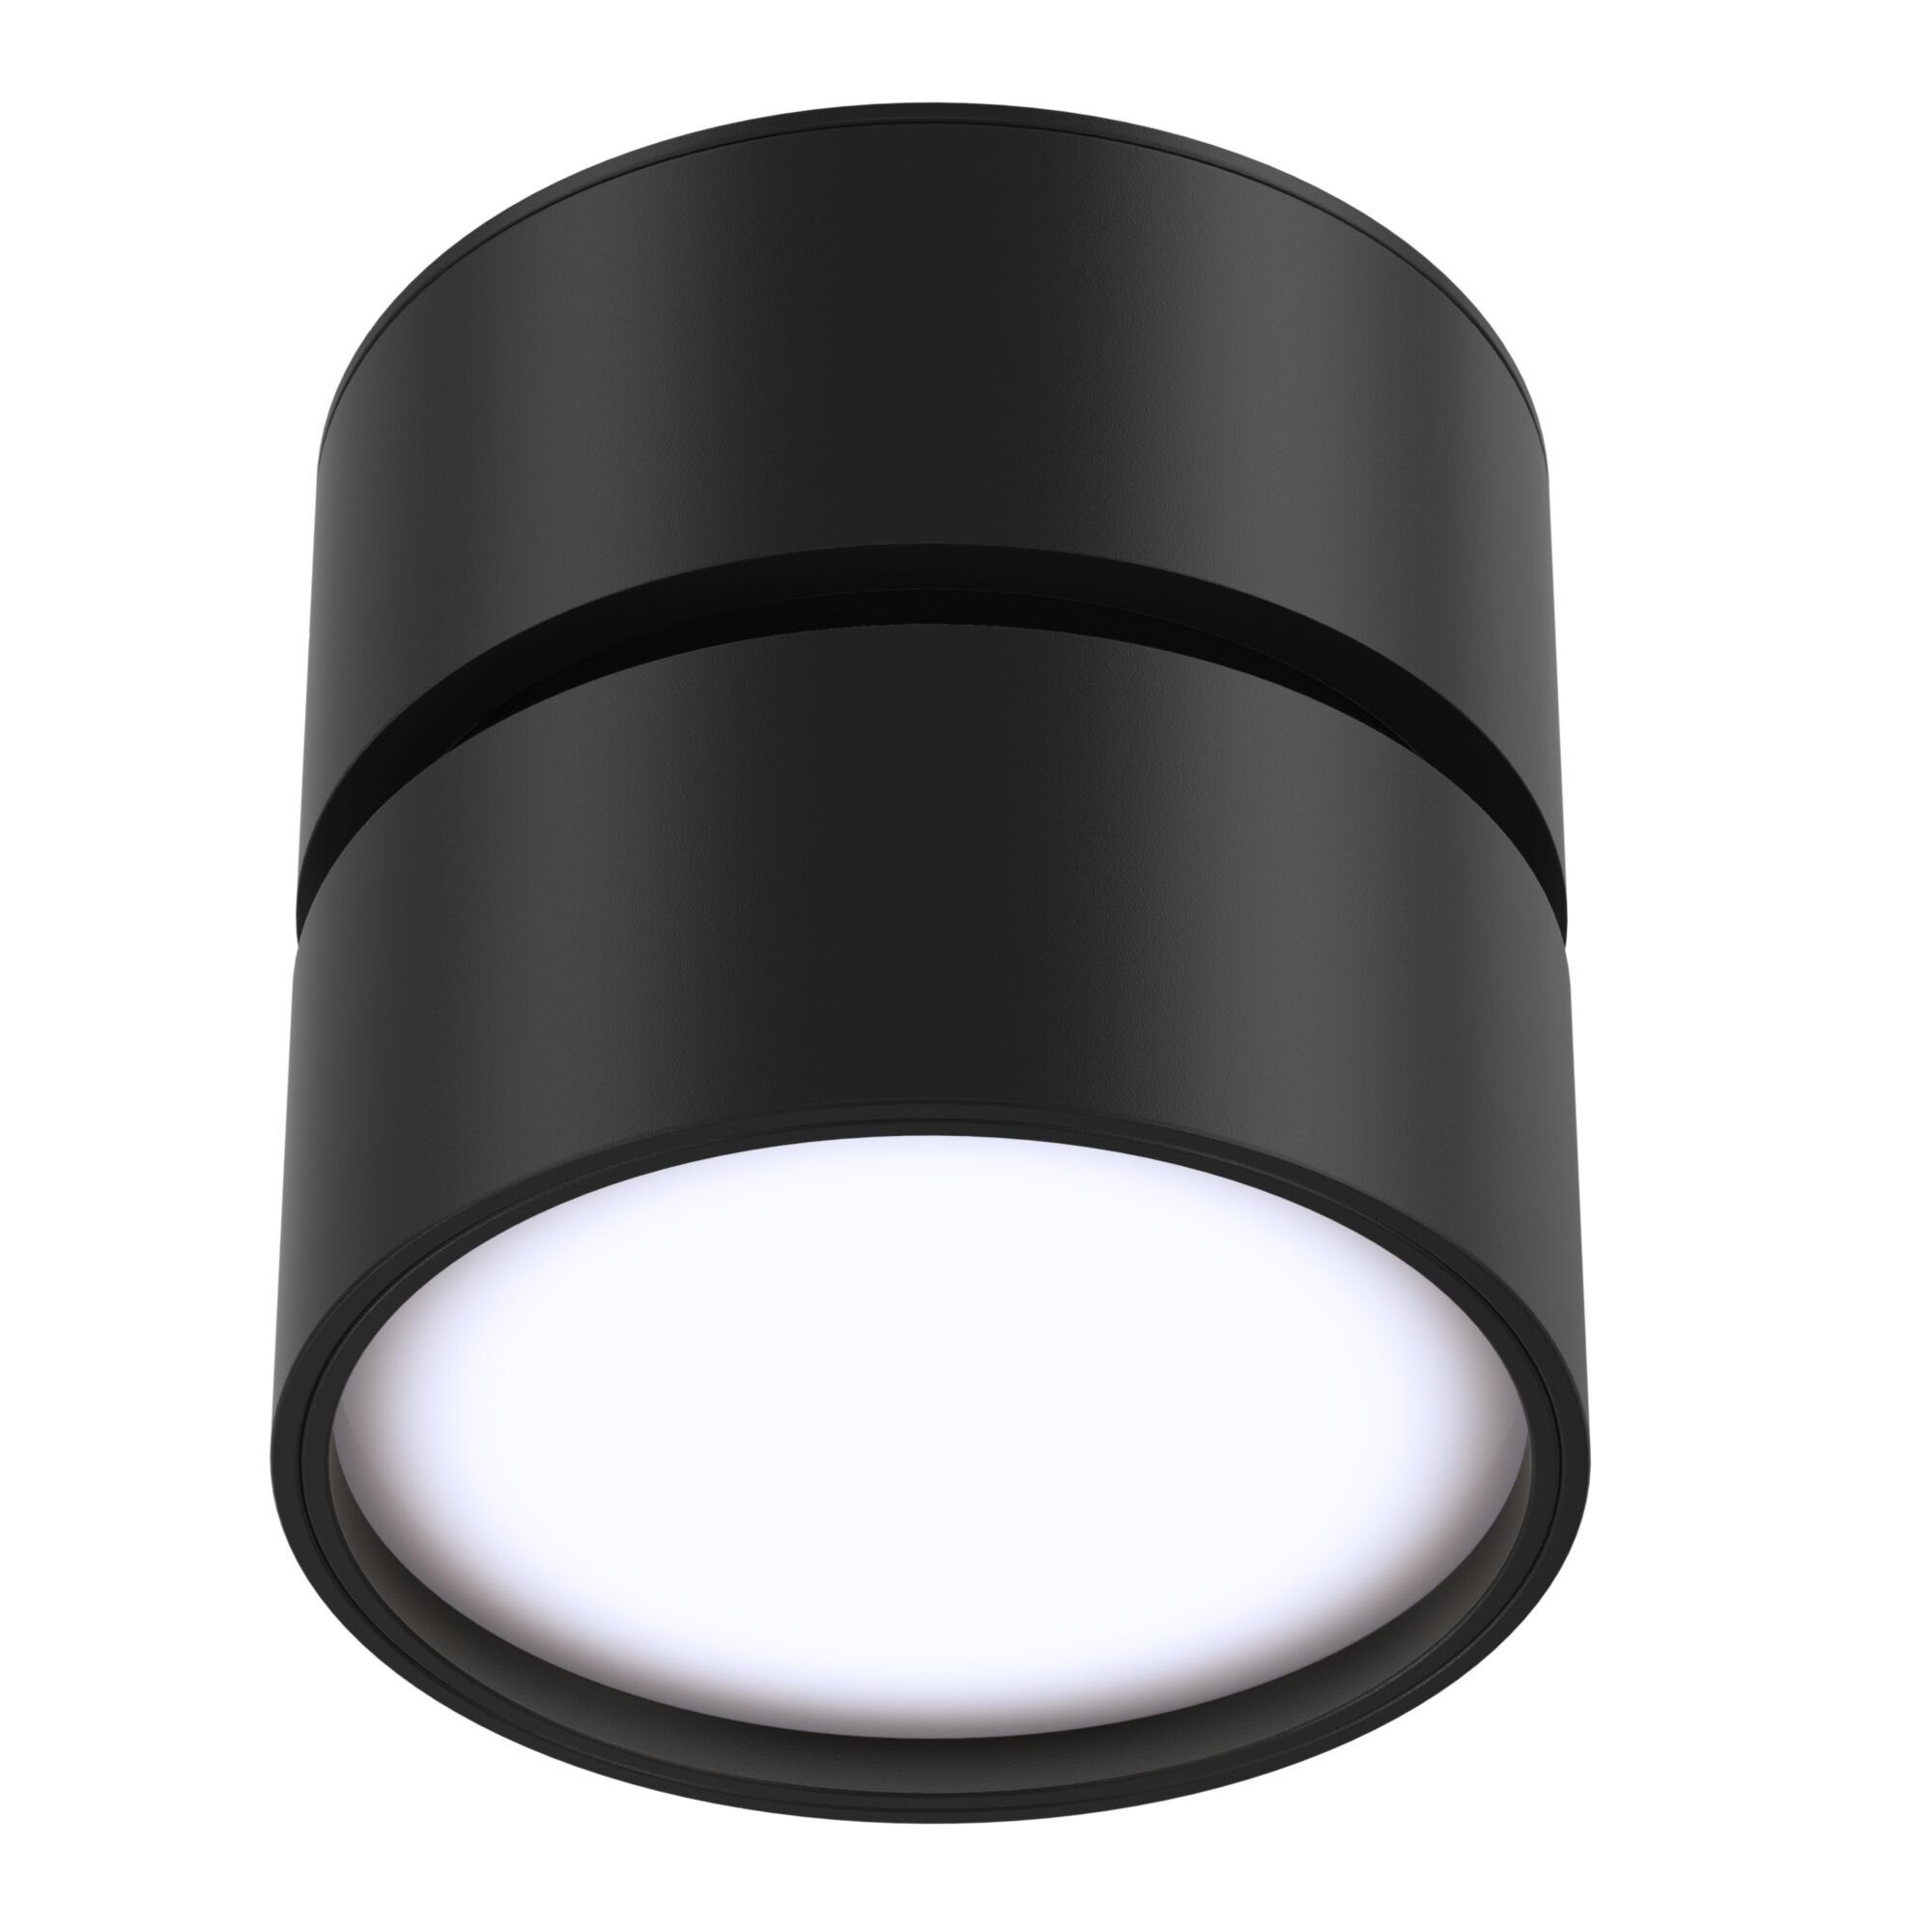 Design fest LIGHTING 5 integriert, hochwertige cm, MAYTONI Lampe dekoratives 8.5x8x8.5 Raumobjekt Deckenleuchte Onda & LED DECORATIVE